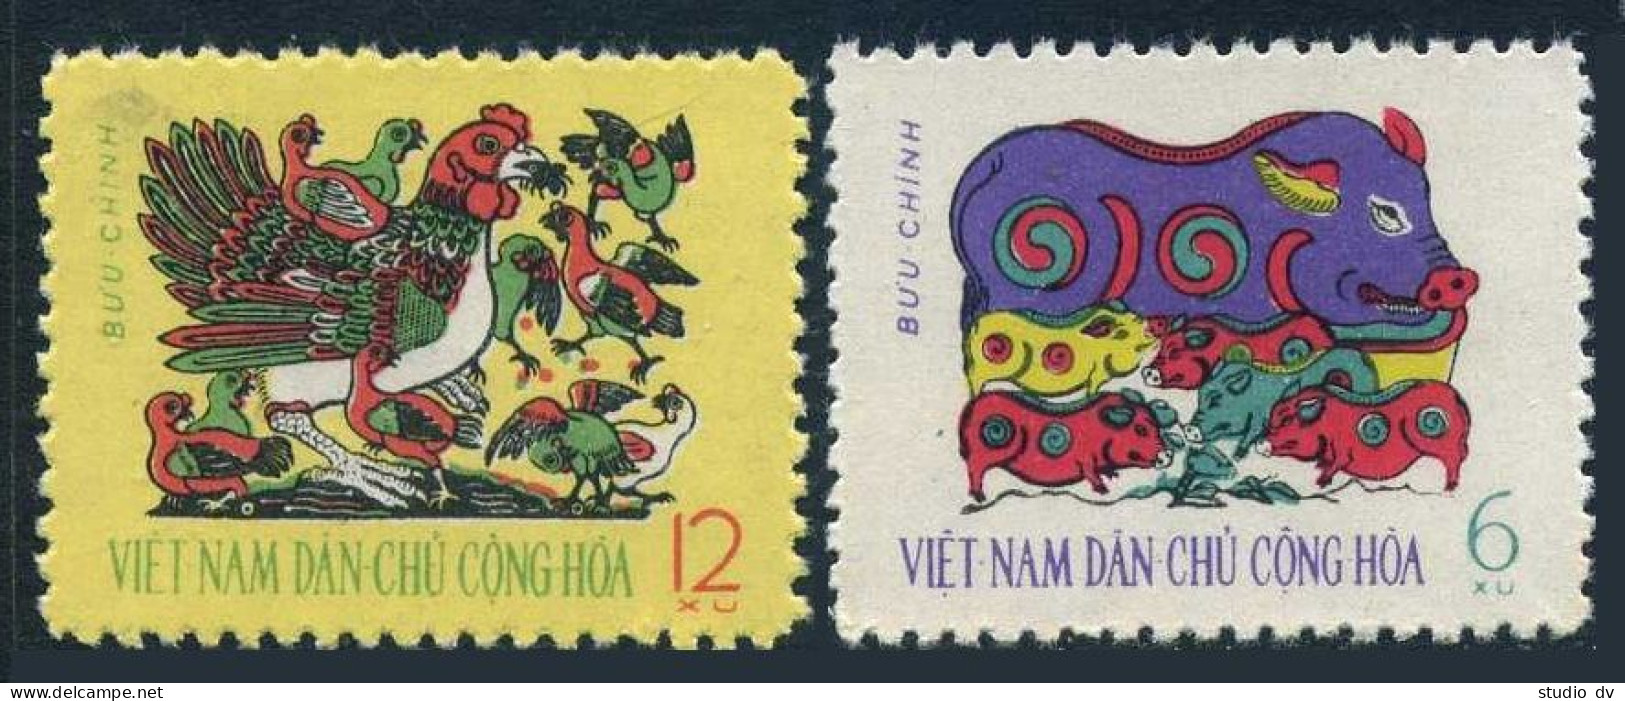 Viet Nam 186-187,MNH.Michel 192-193. Tet Holiday,1962.Sow,piglets,Poultry. - Vietnam